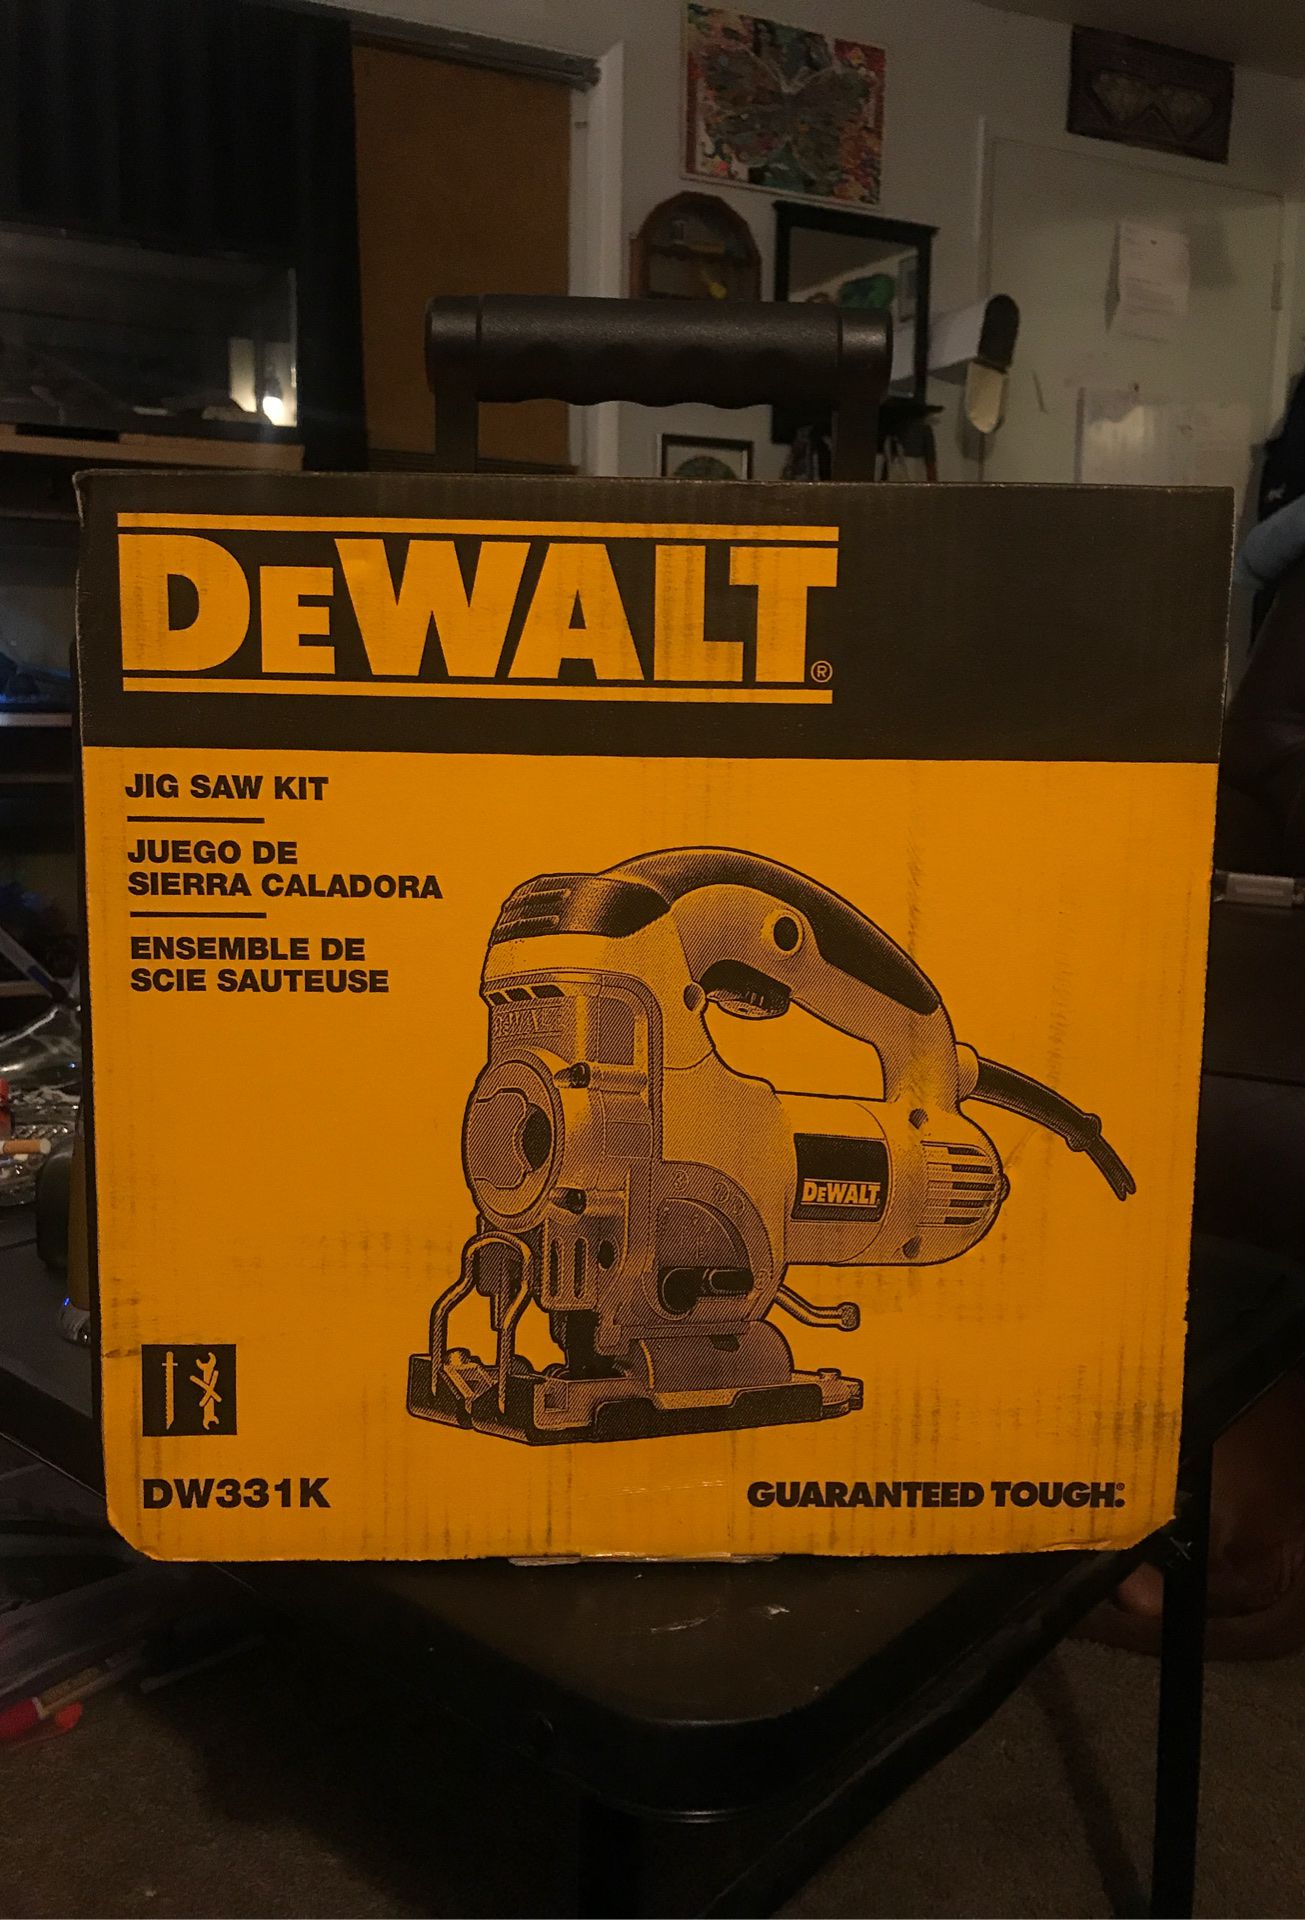 Dewalt jig saw kit. Model # DW331K